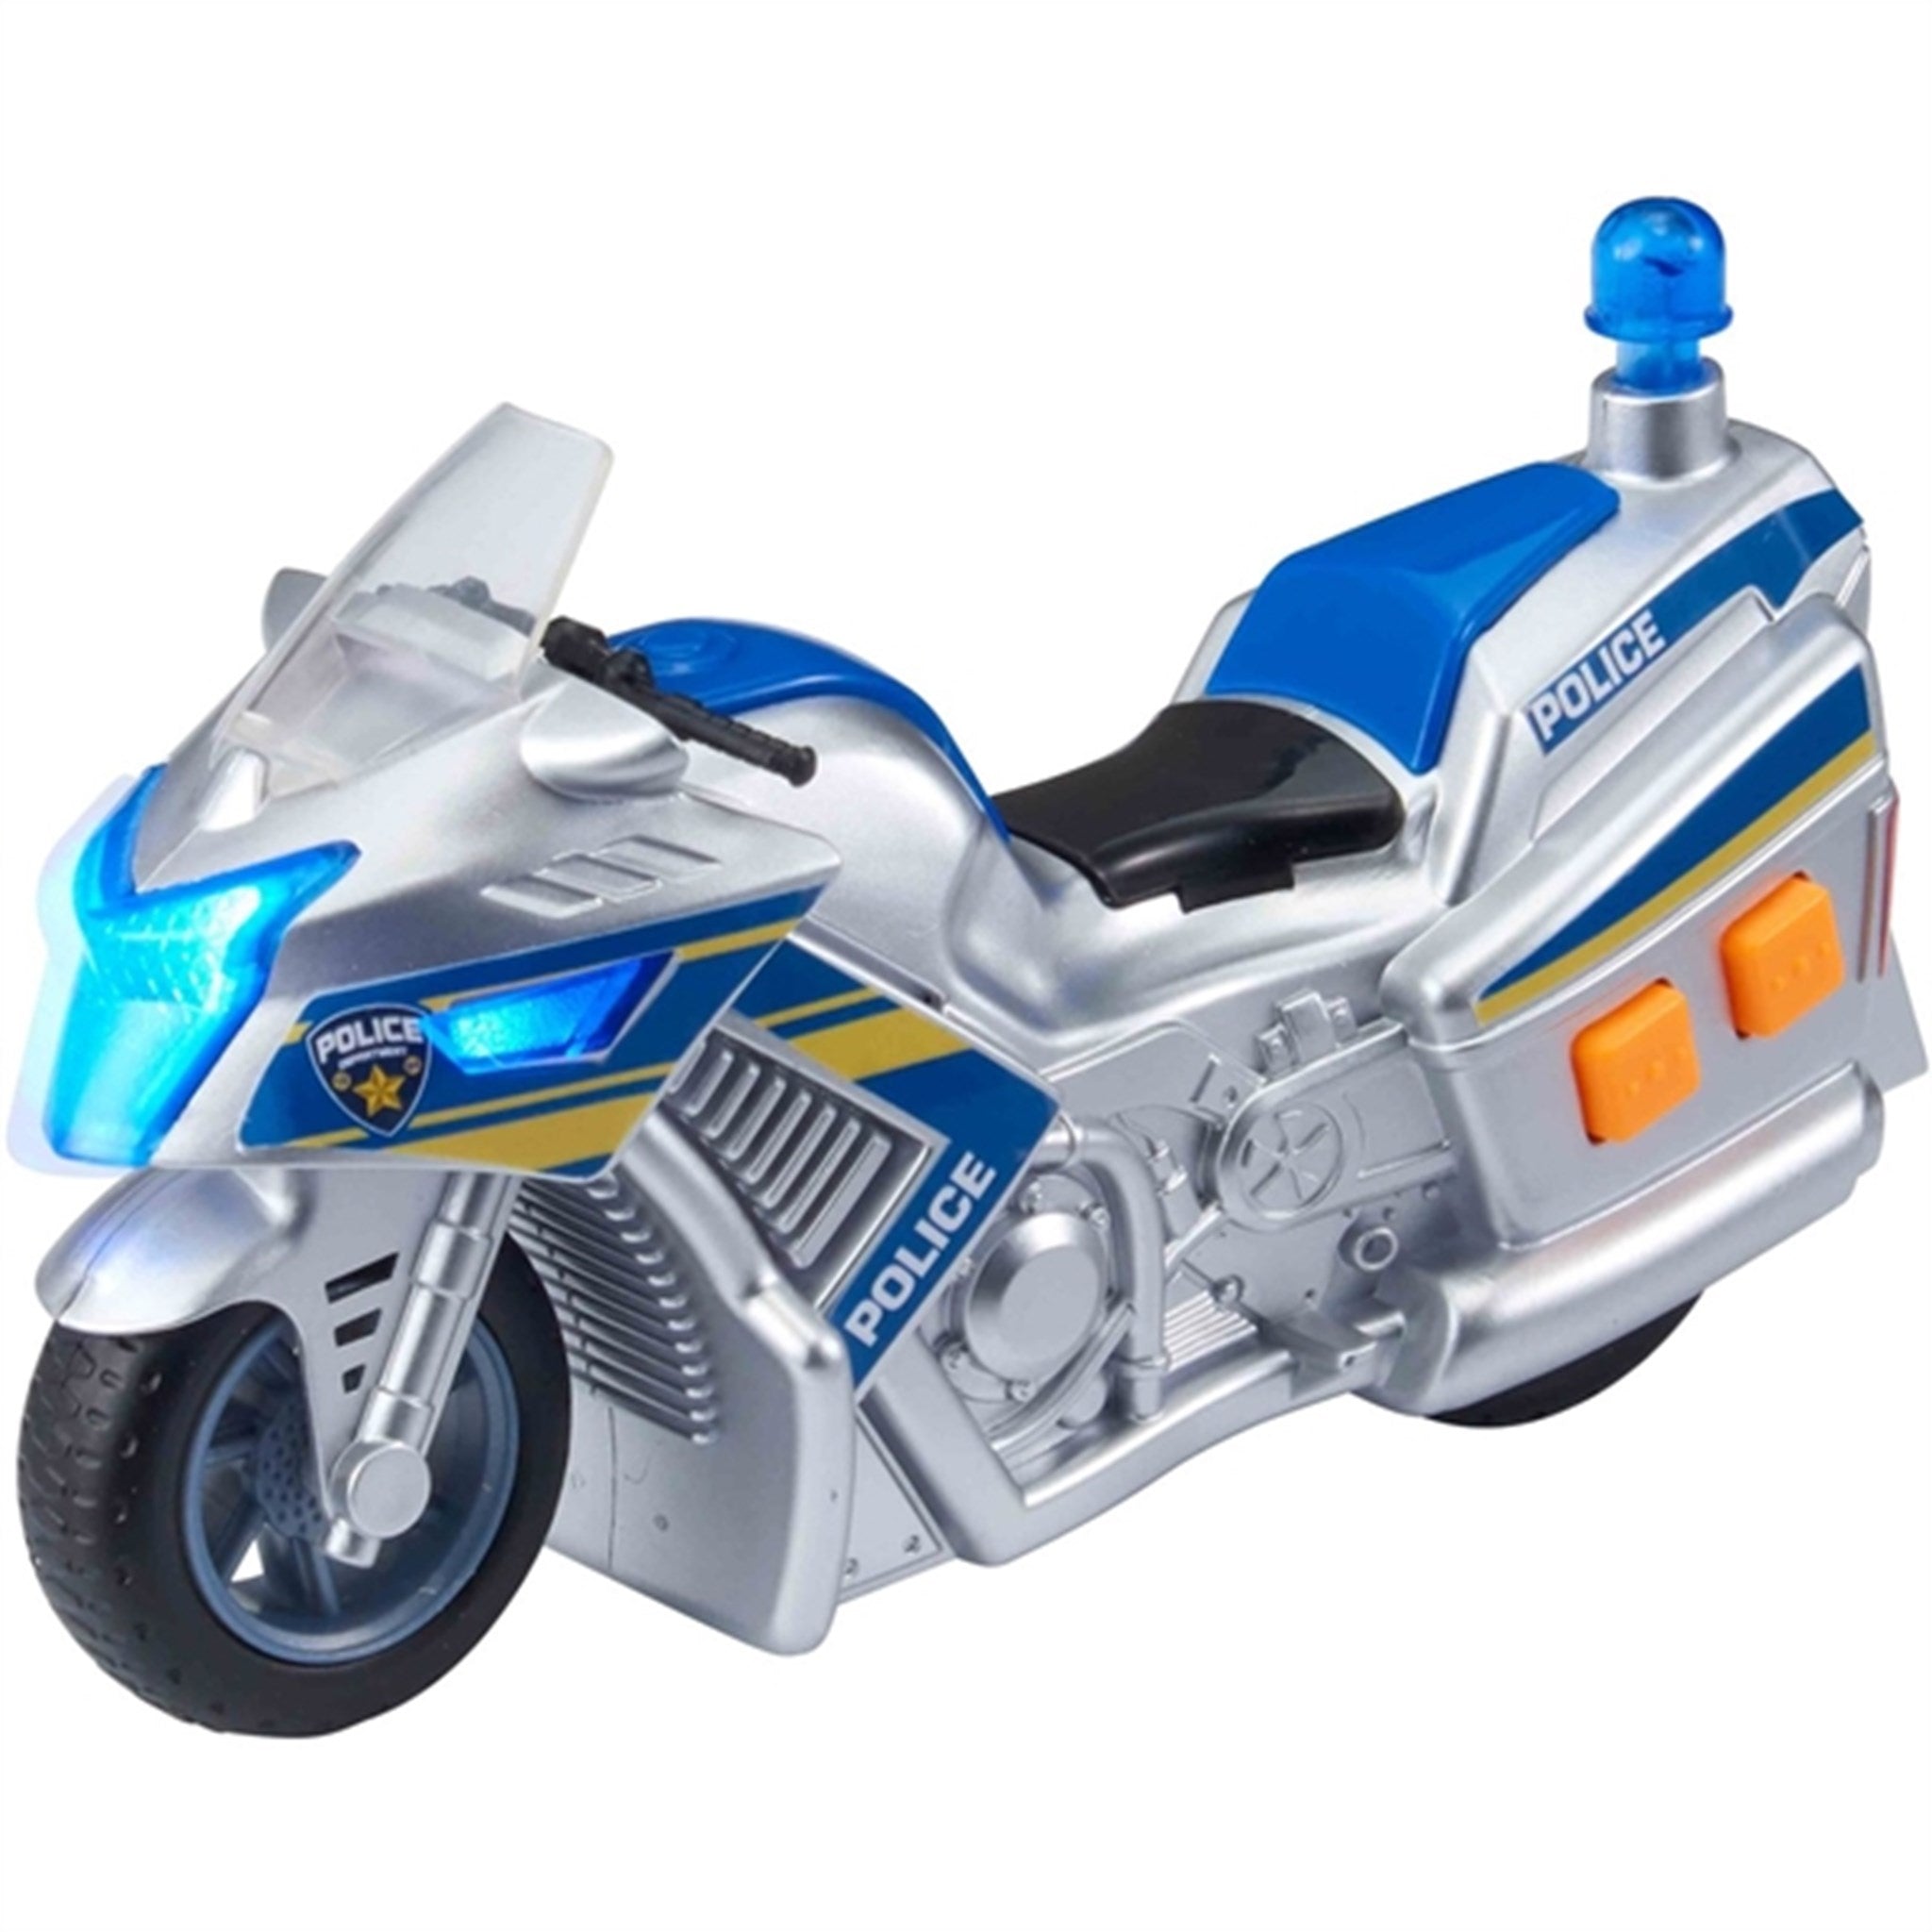 Teamsterz Small L&S Politi Motorcykel